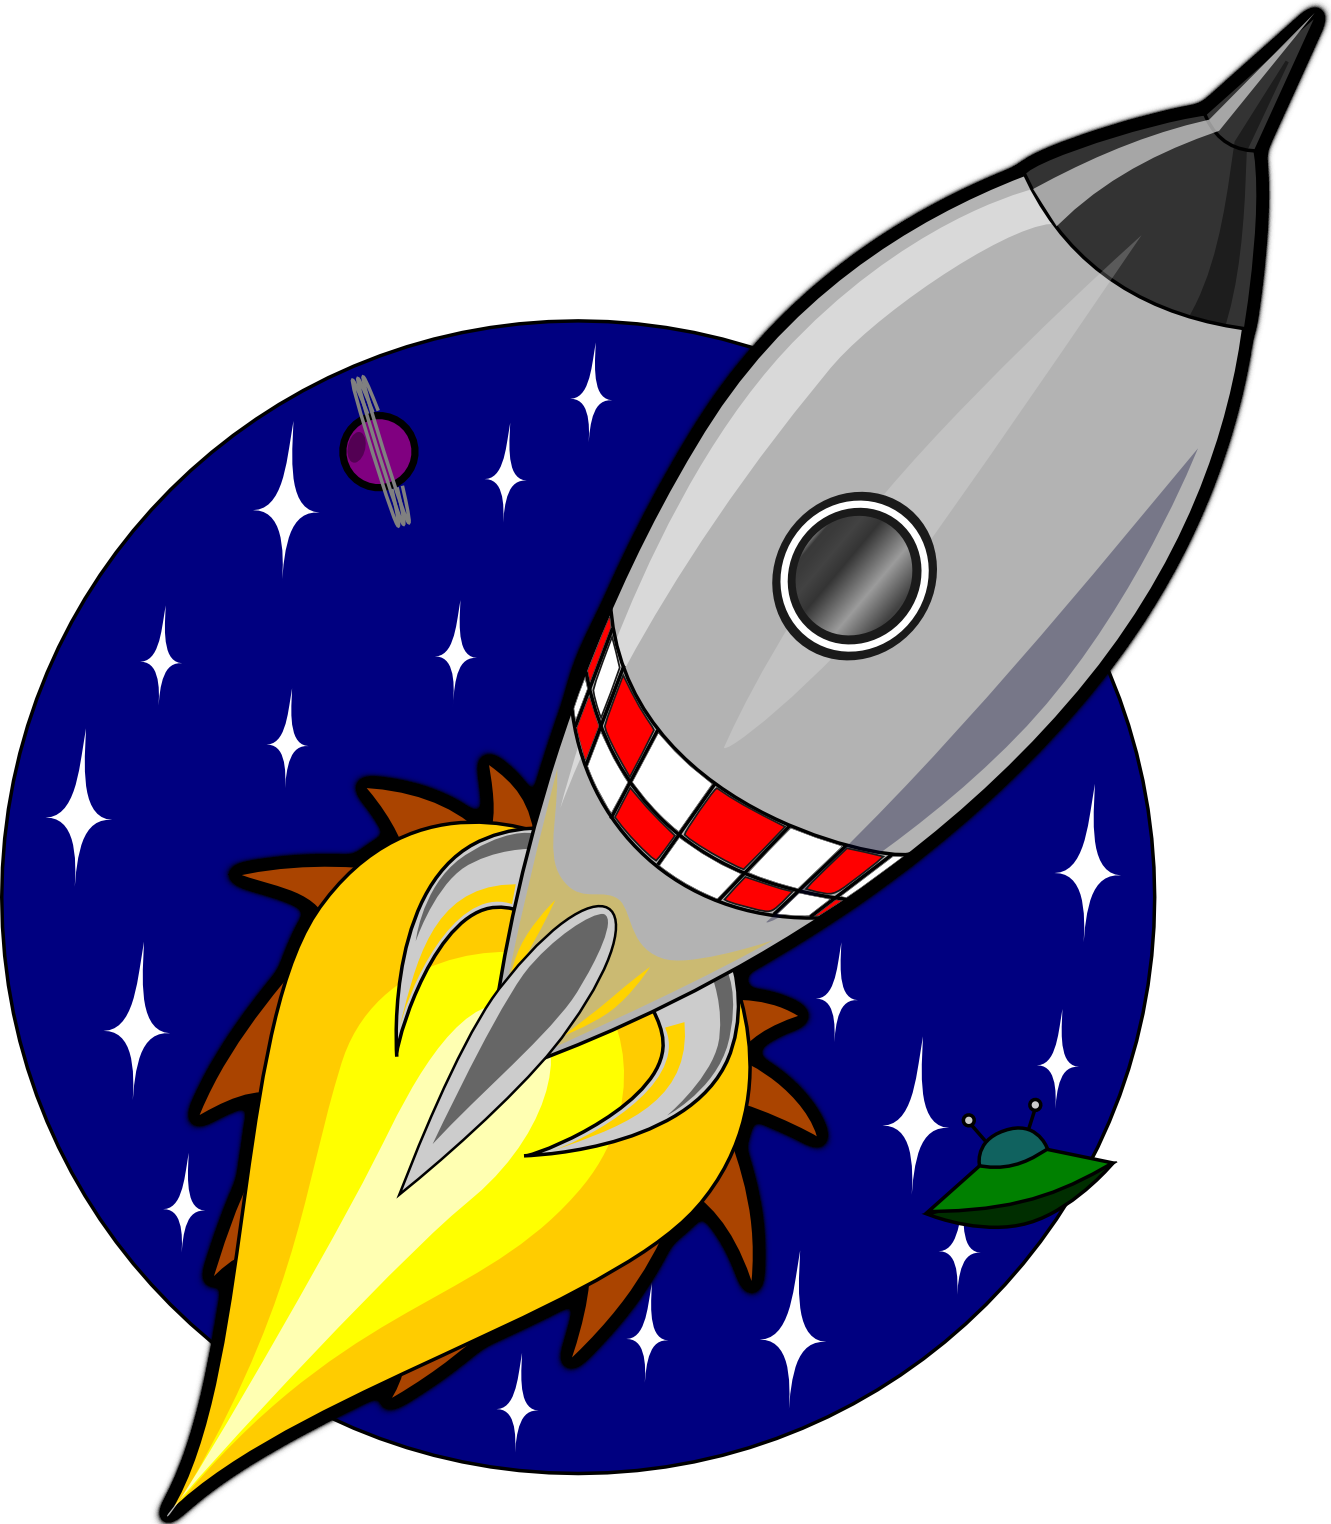 Cartoon Rocket Images - ClipArt Best